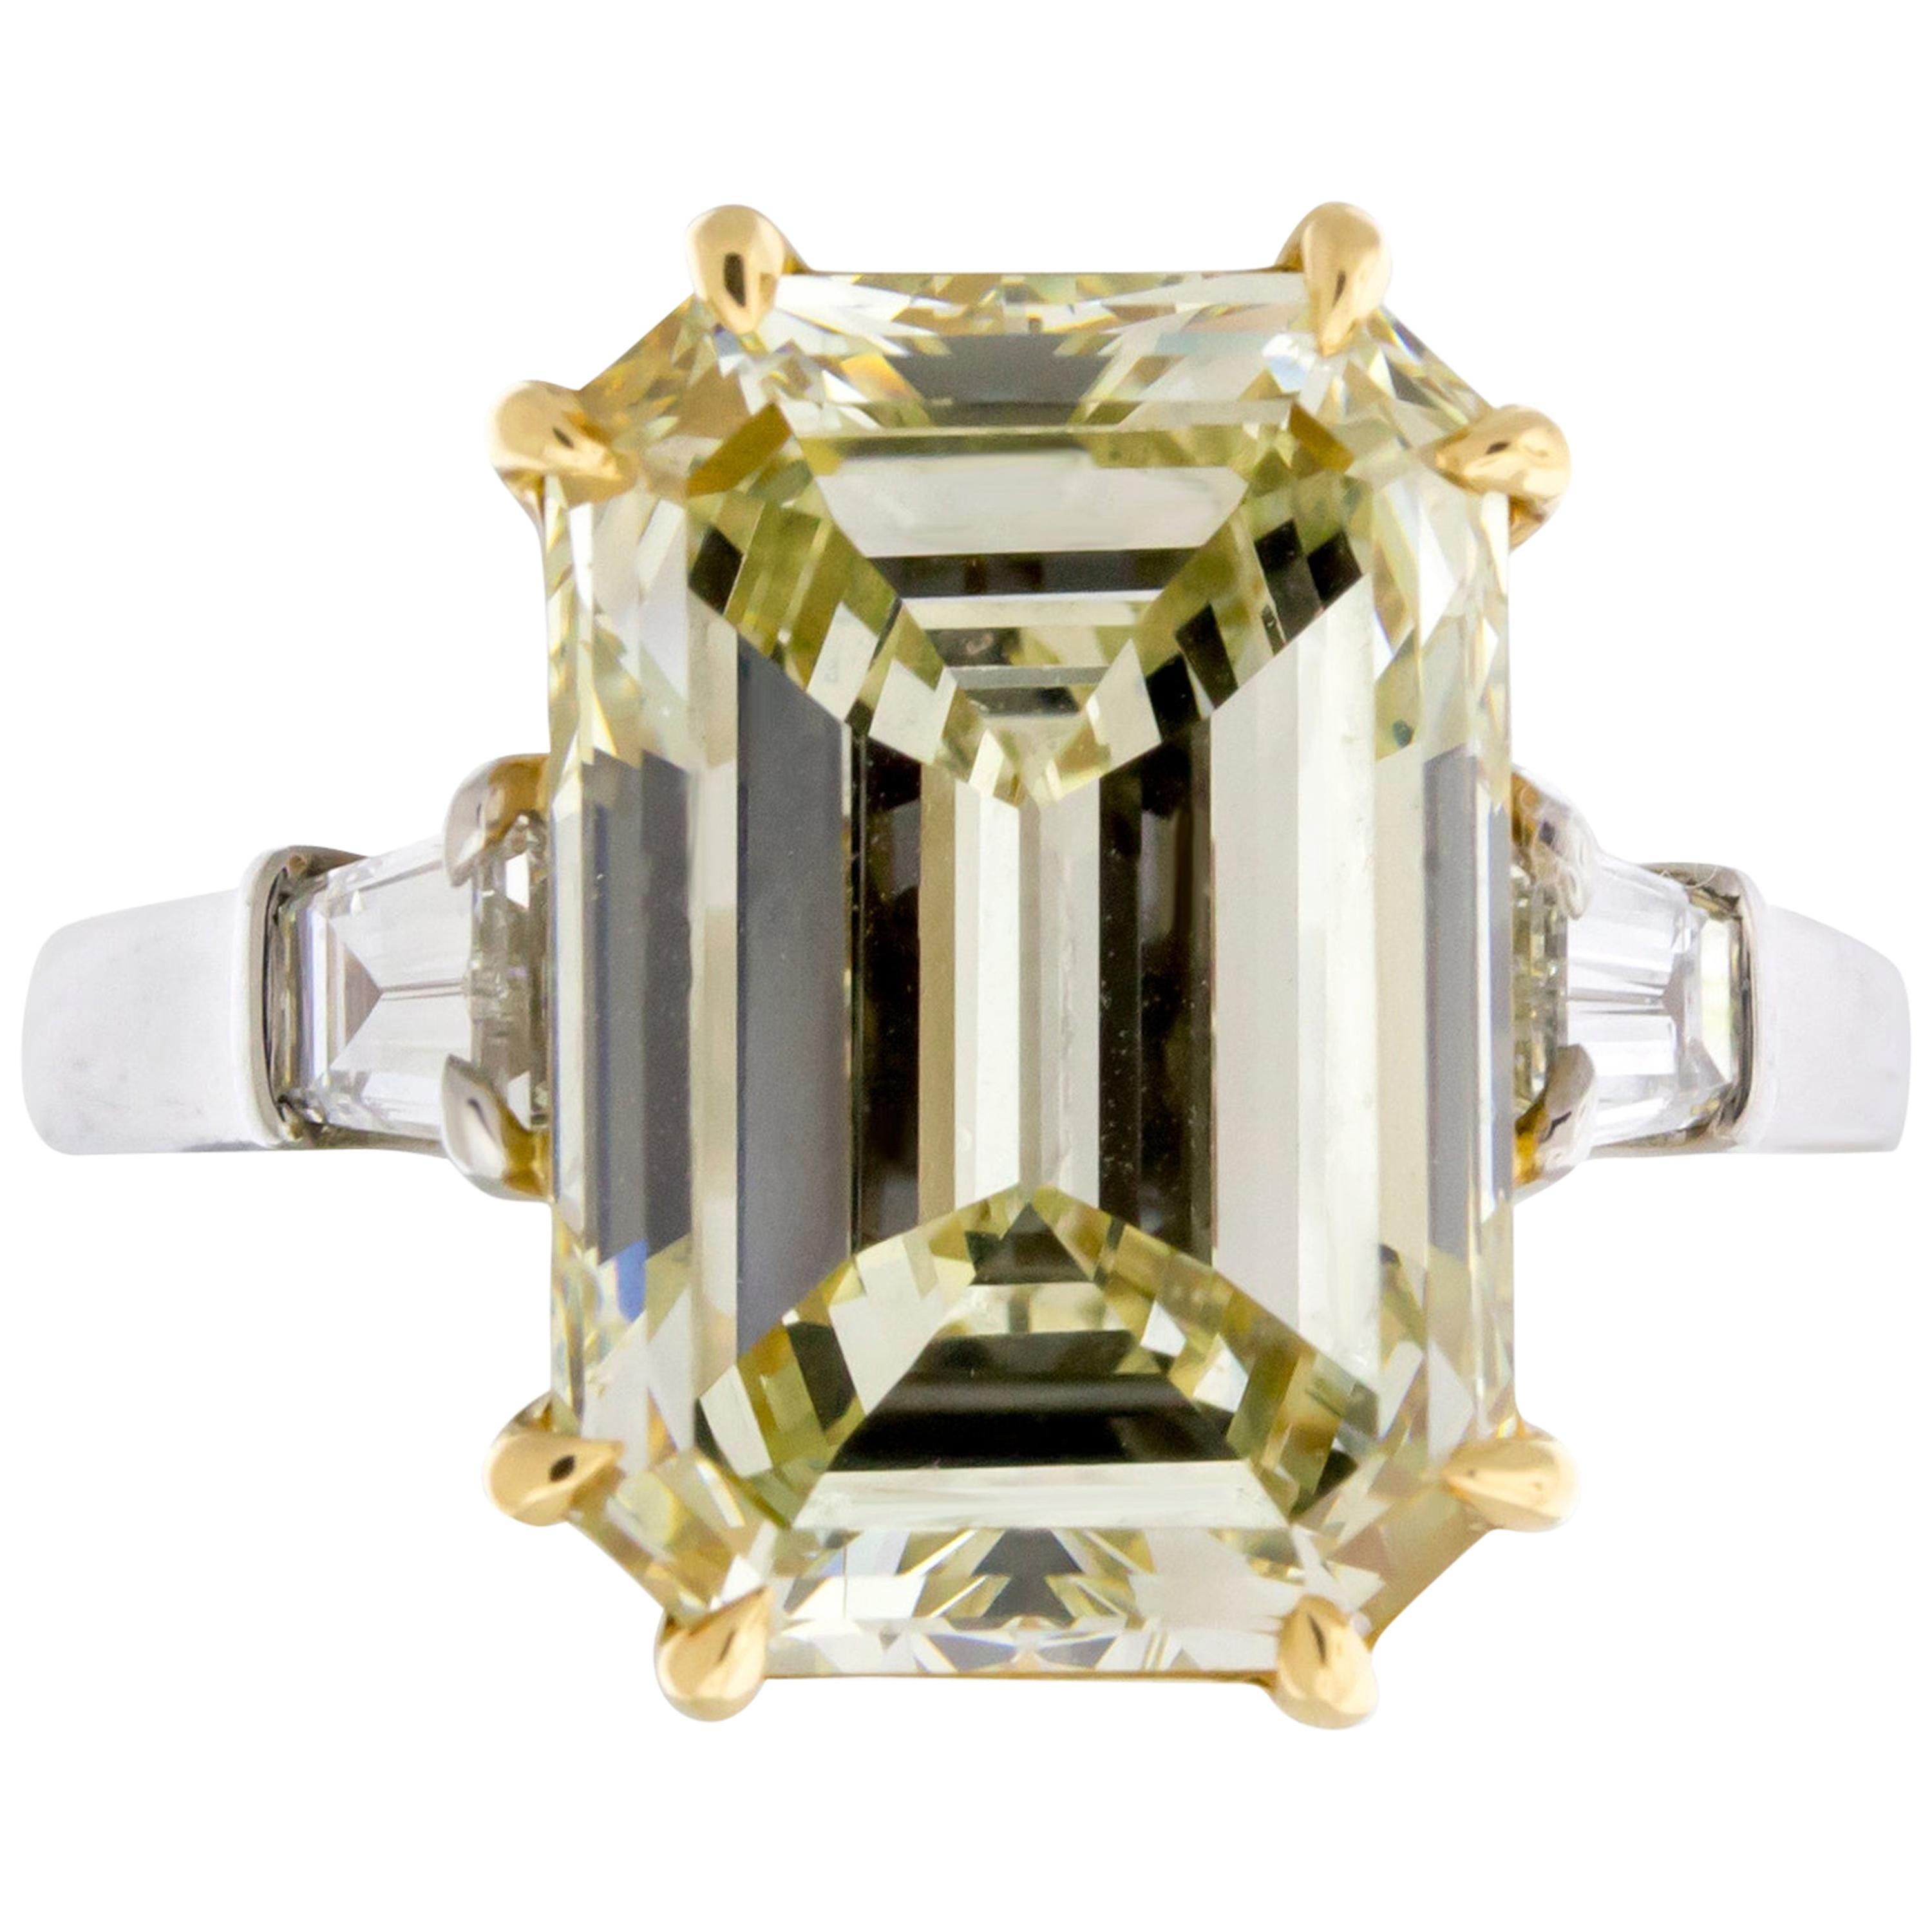 7.52 Carat Fancy Light Yellow GIA Certified Emerald Cut Diamond Engagement Ring